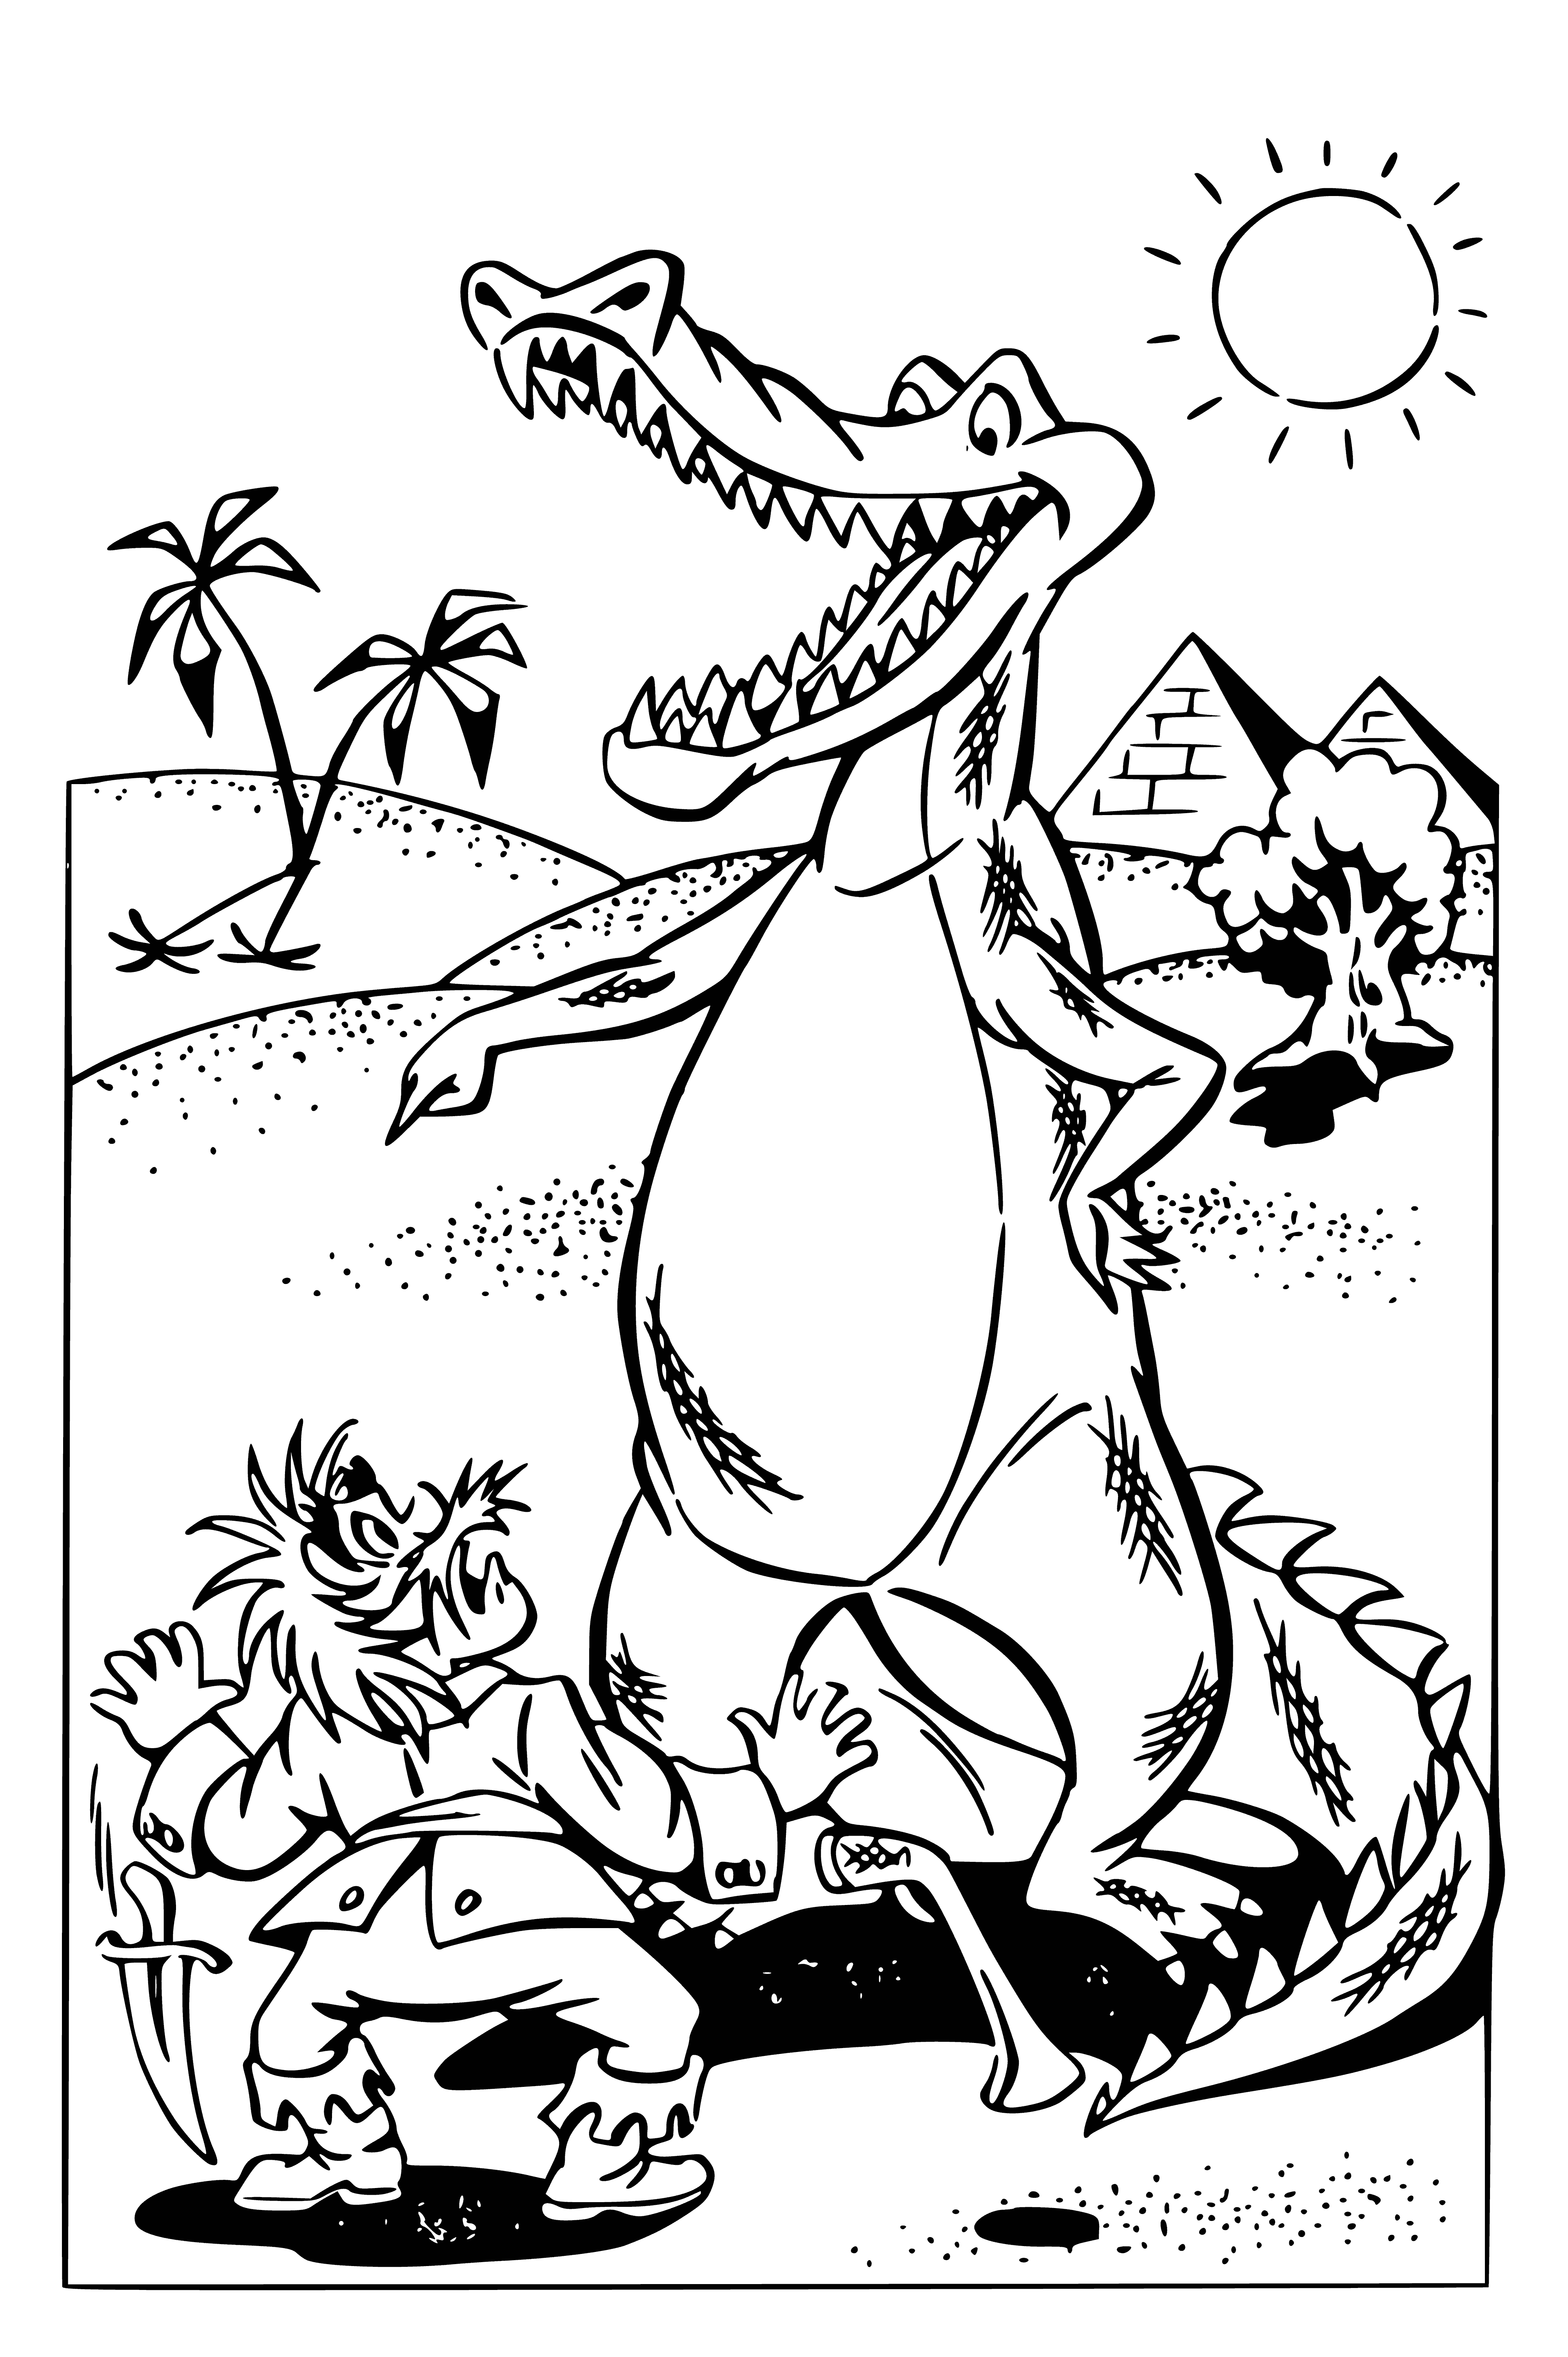 Crocodile and Barmaley coloring page